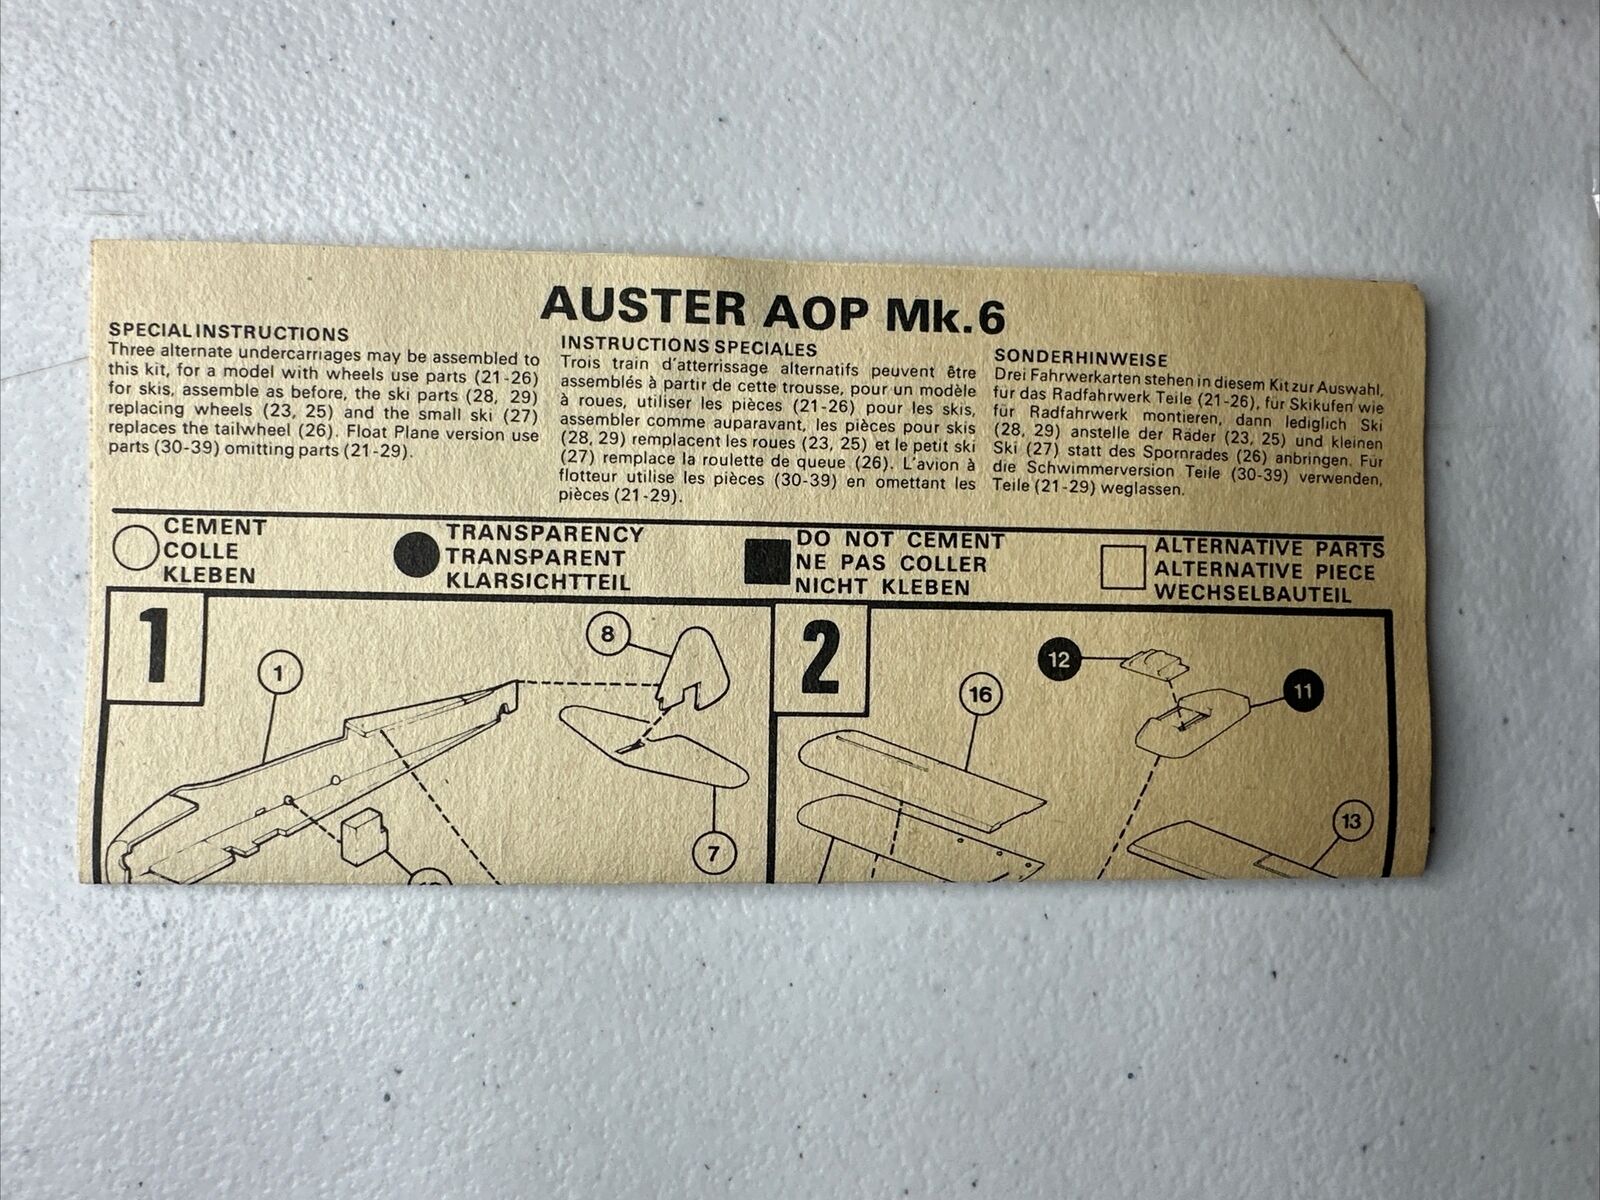 Vintage Airfix Auster AOP VI Model Kit 1/72 Scale - Complete Collectible for Model Enthusiasts - TreasuTiques